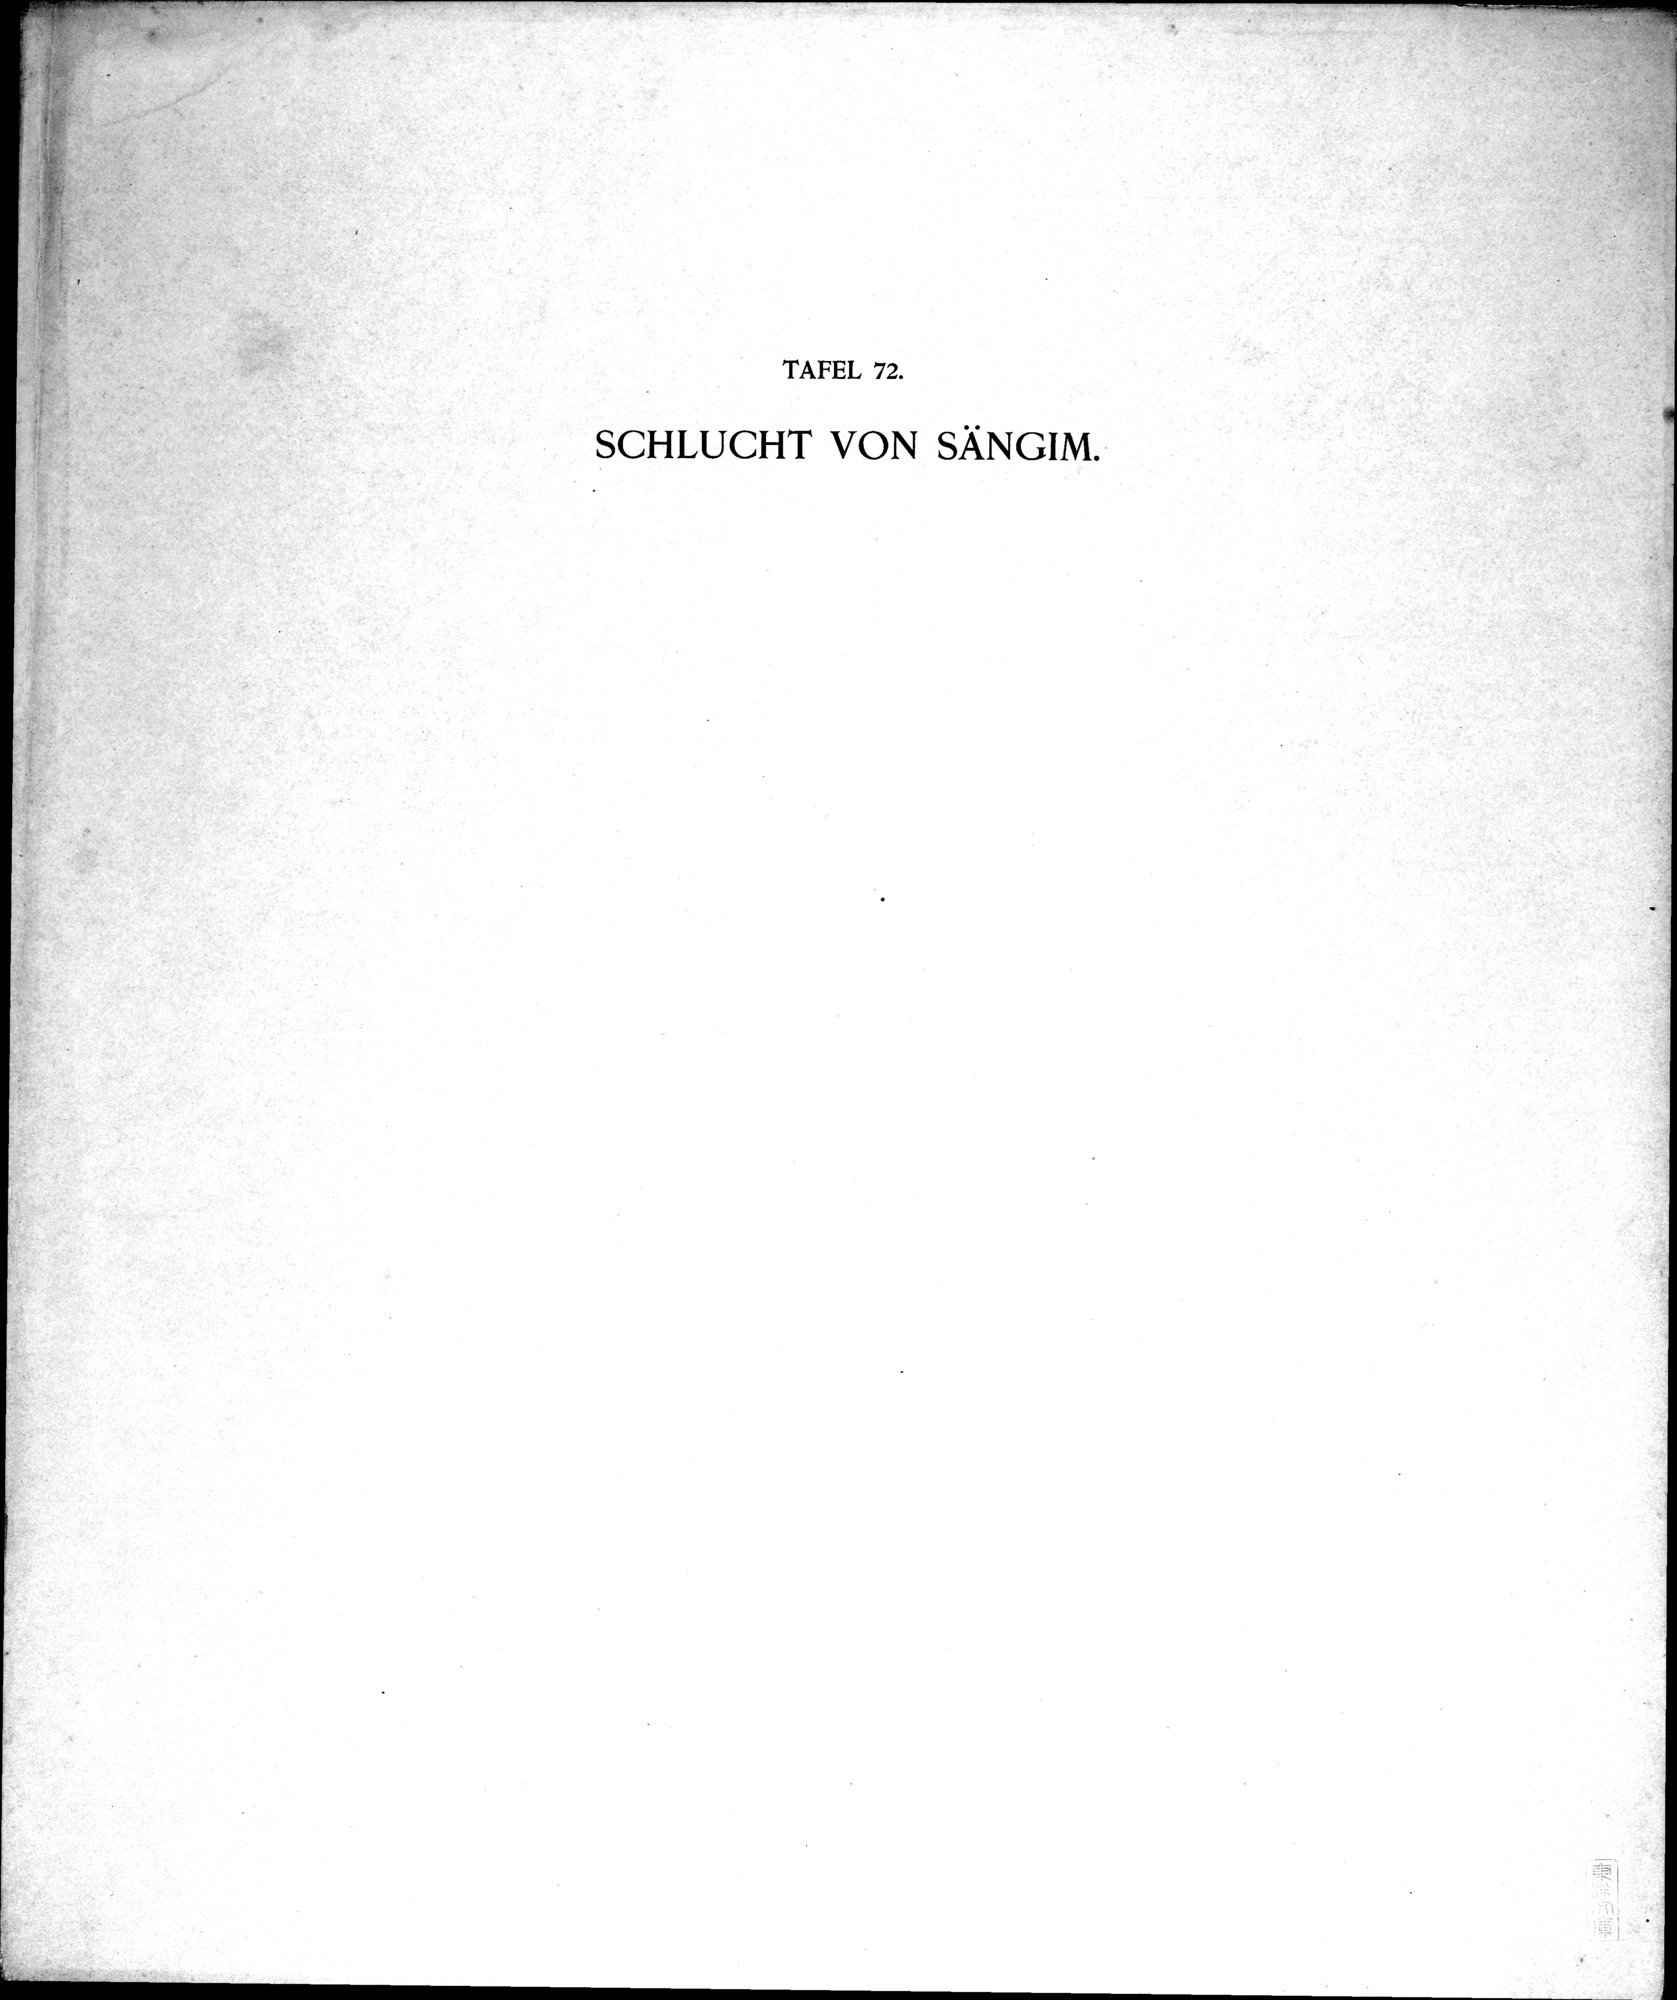 Chotscho : vol.1 / 240 ページ（白黒高解像度画像）